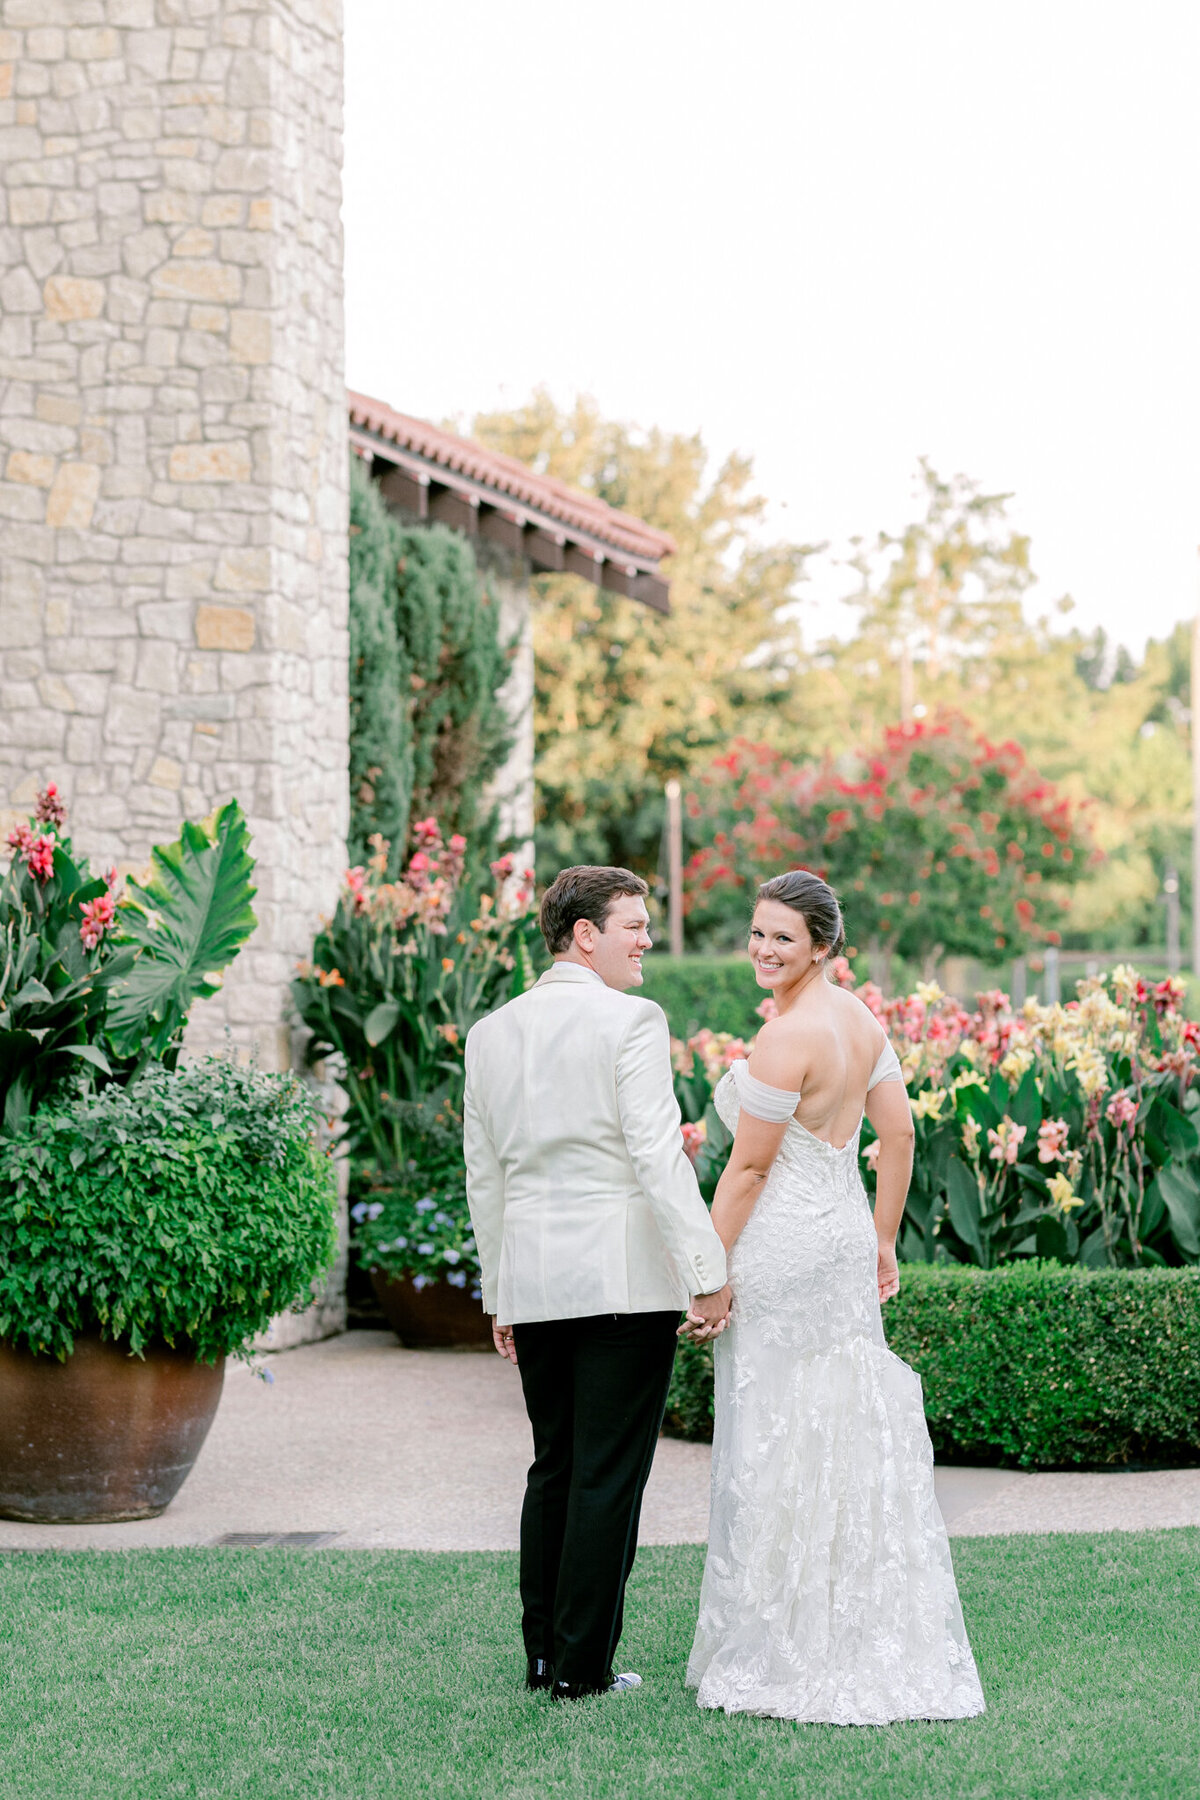 Allie & John Wedding at Royal Oaks Country Club Christ the King Church | Dallas Wedding Photographer | Sami Kathryn Photography-135